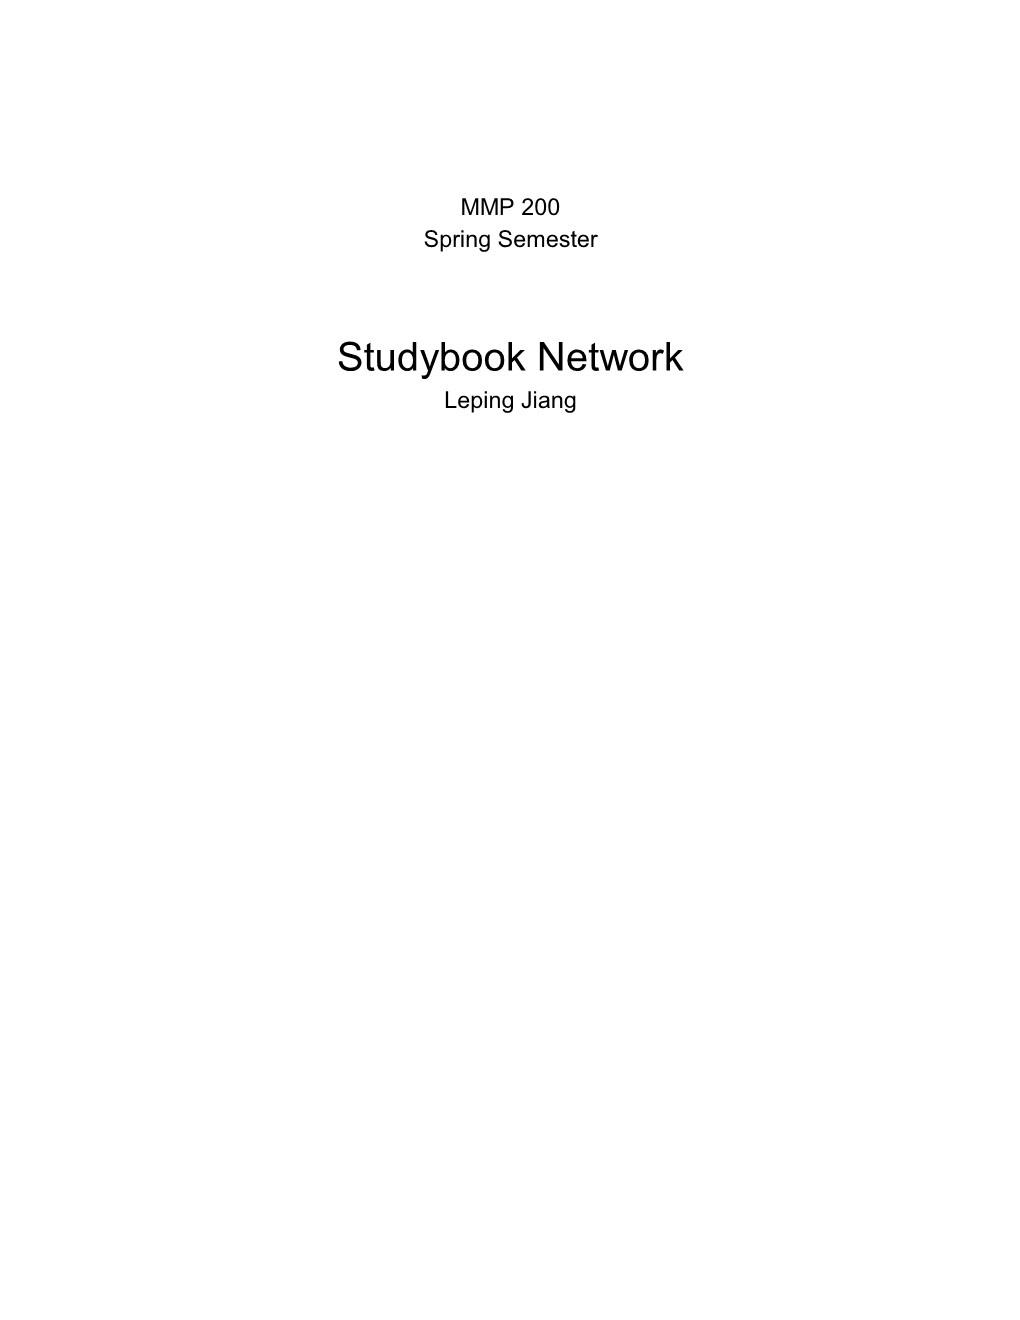 Studybook Network Leping Jiang